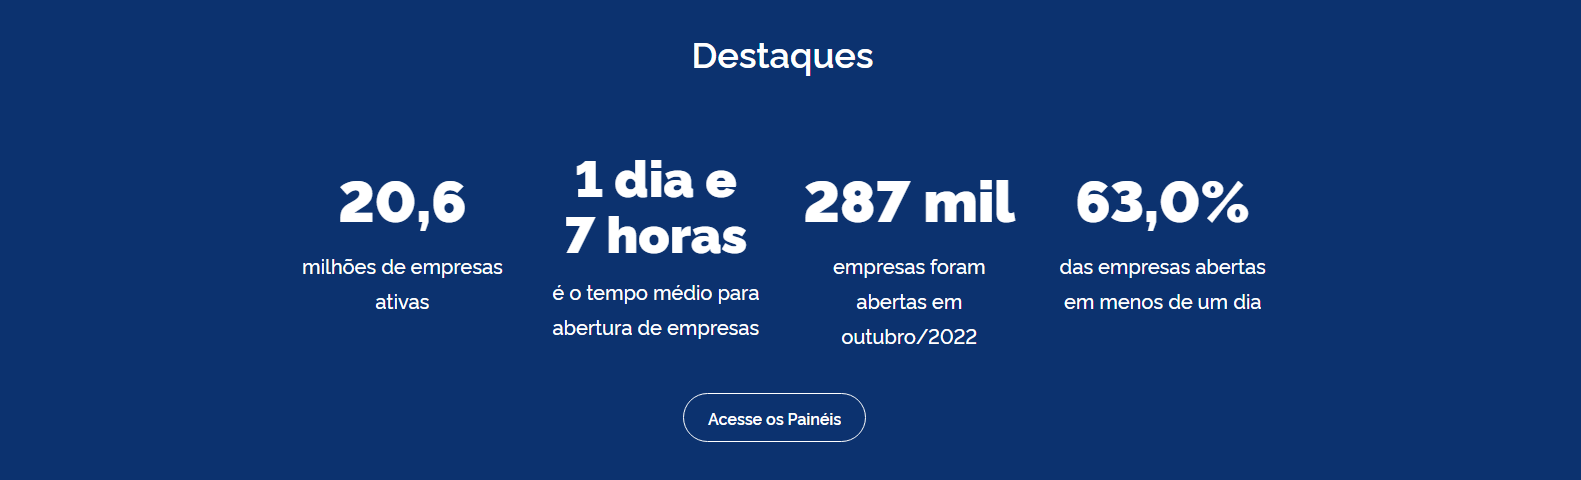 Destaques do Mapa de Empresas, ferramenta do Governo Federal brasileiro. 